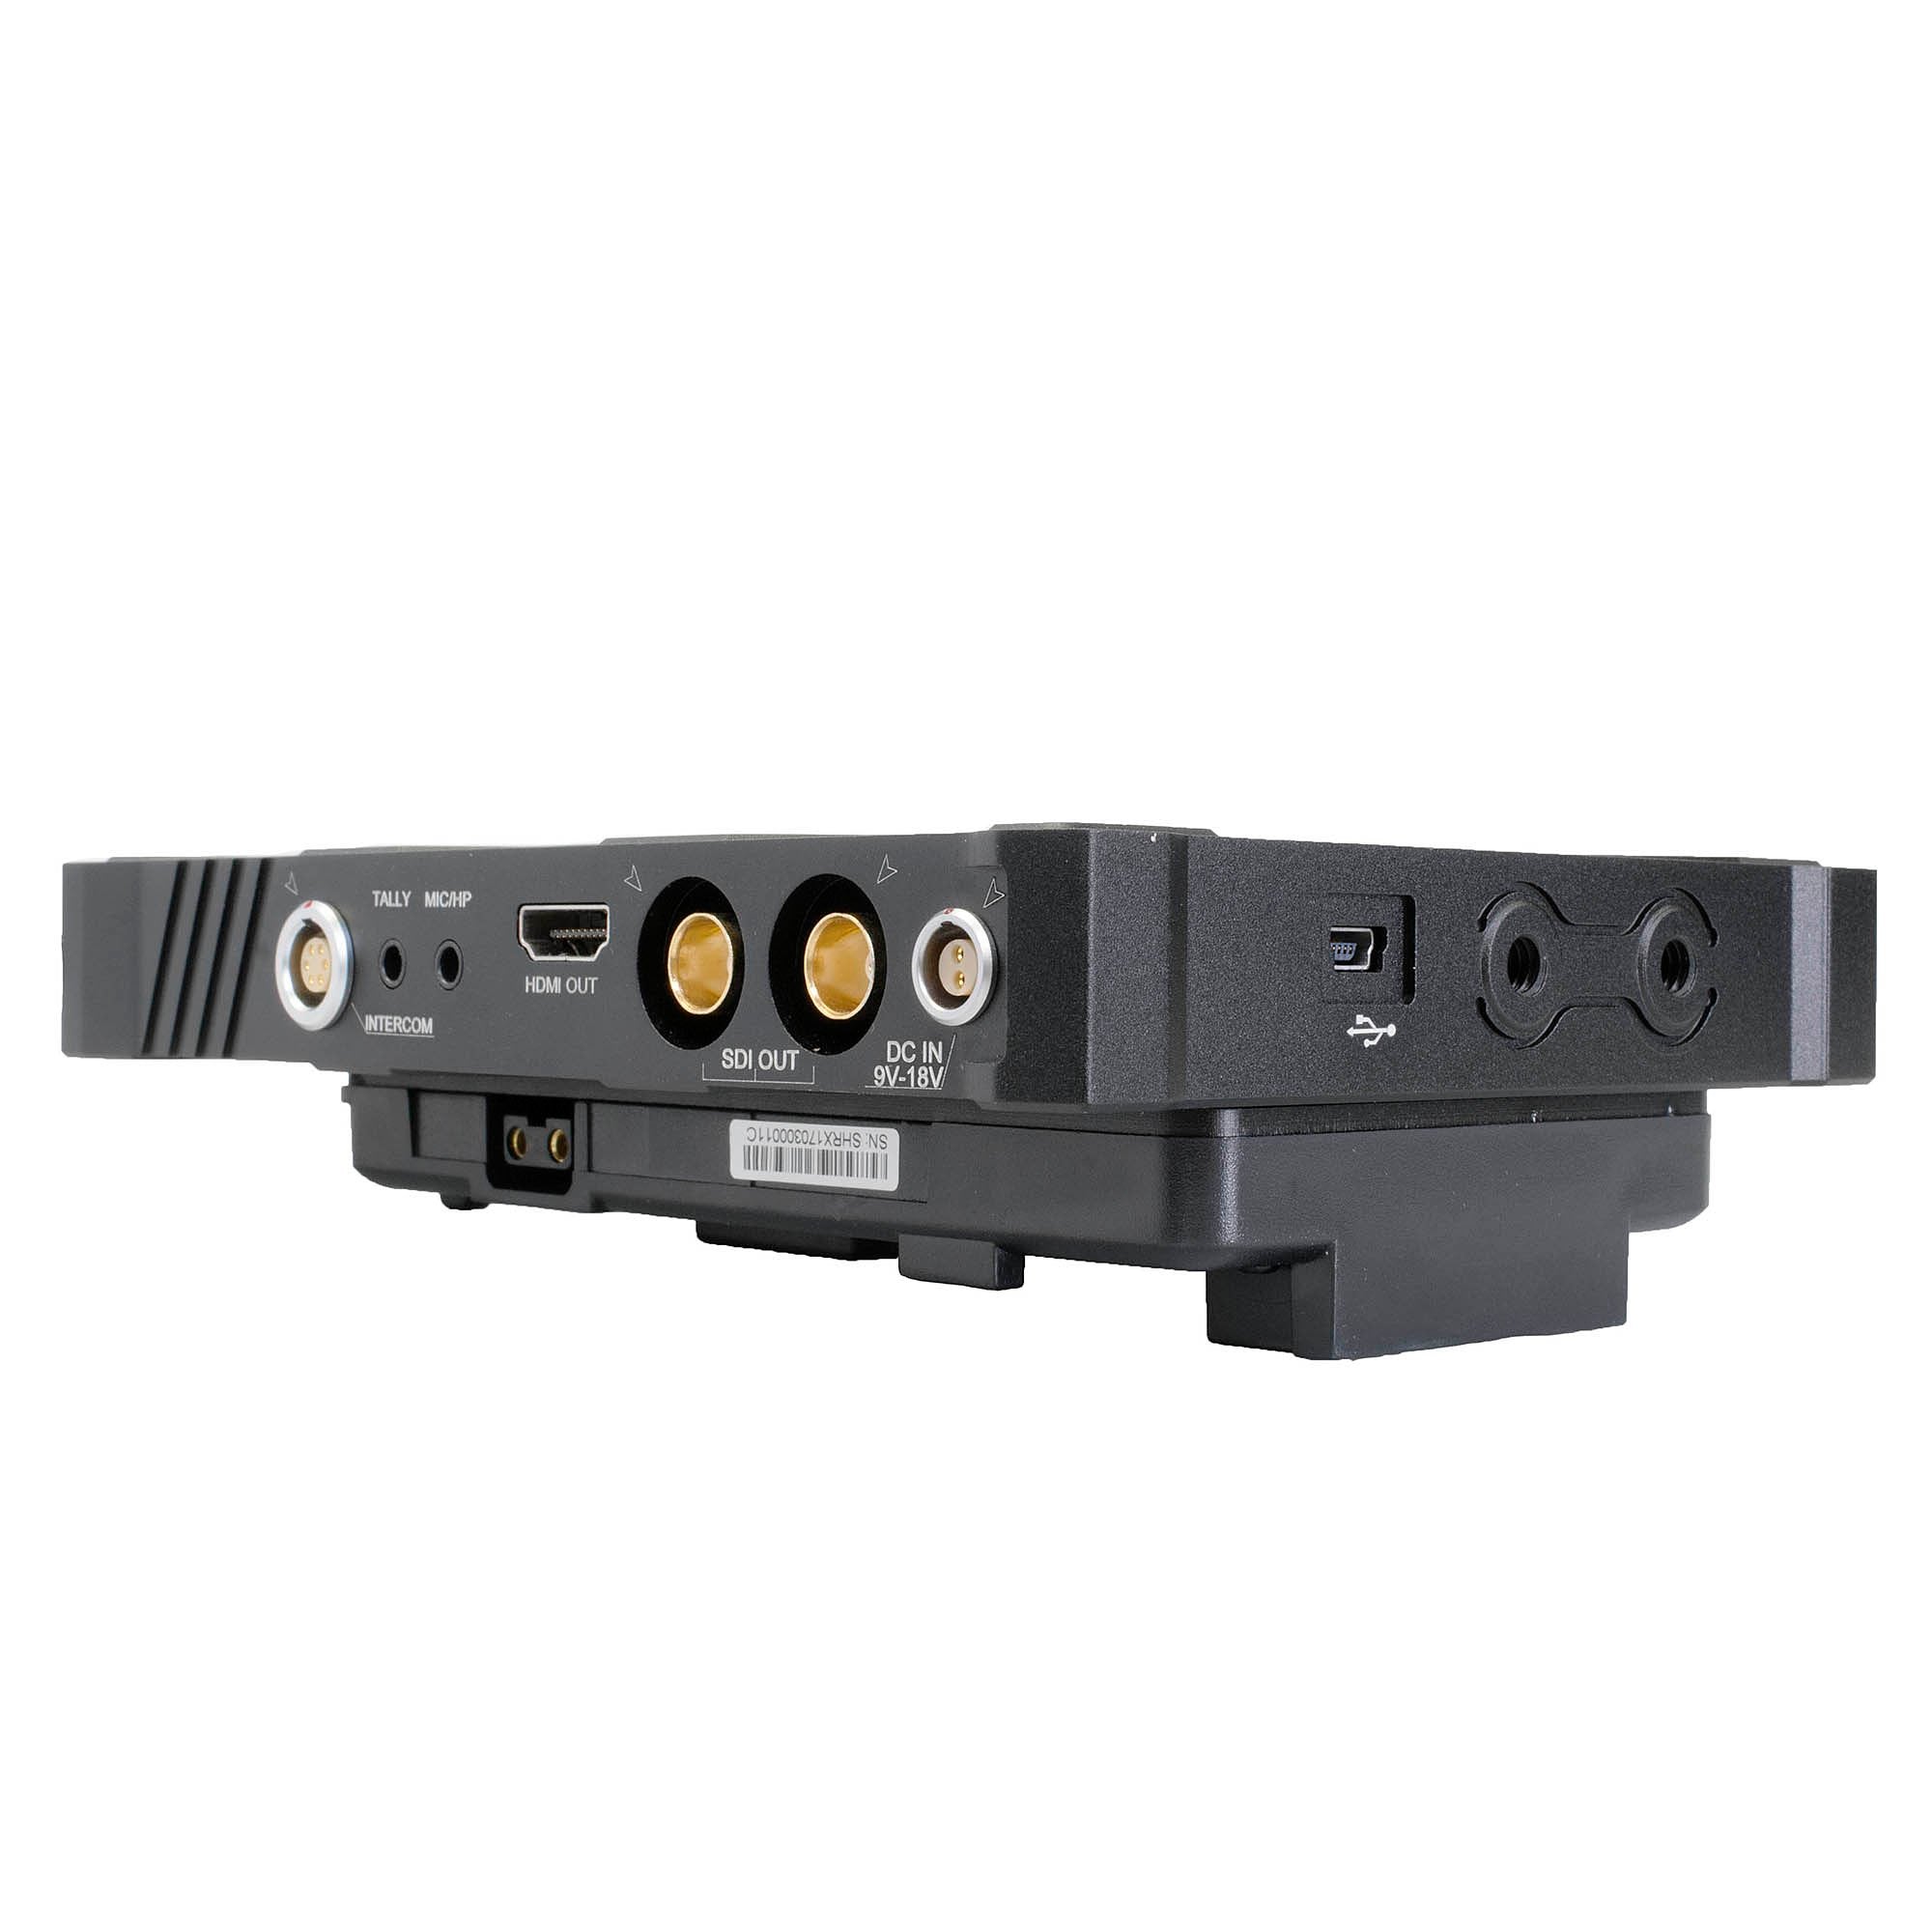 Ghost-Eye 800TC Wireless HDMI and SDI Video Receiver V-Mount